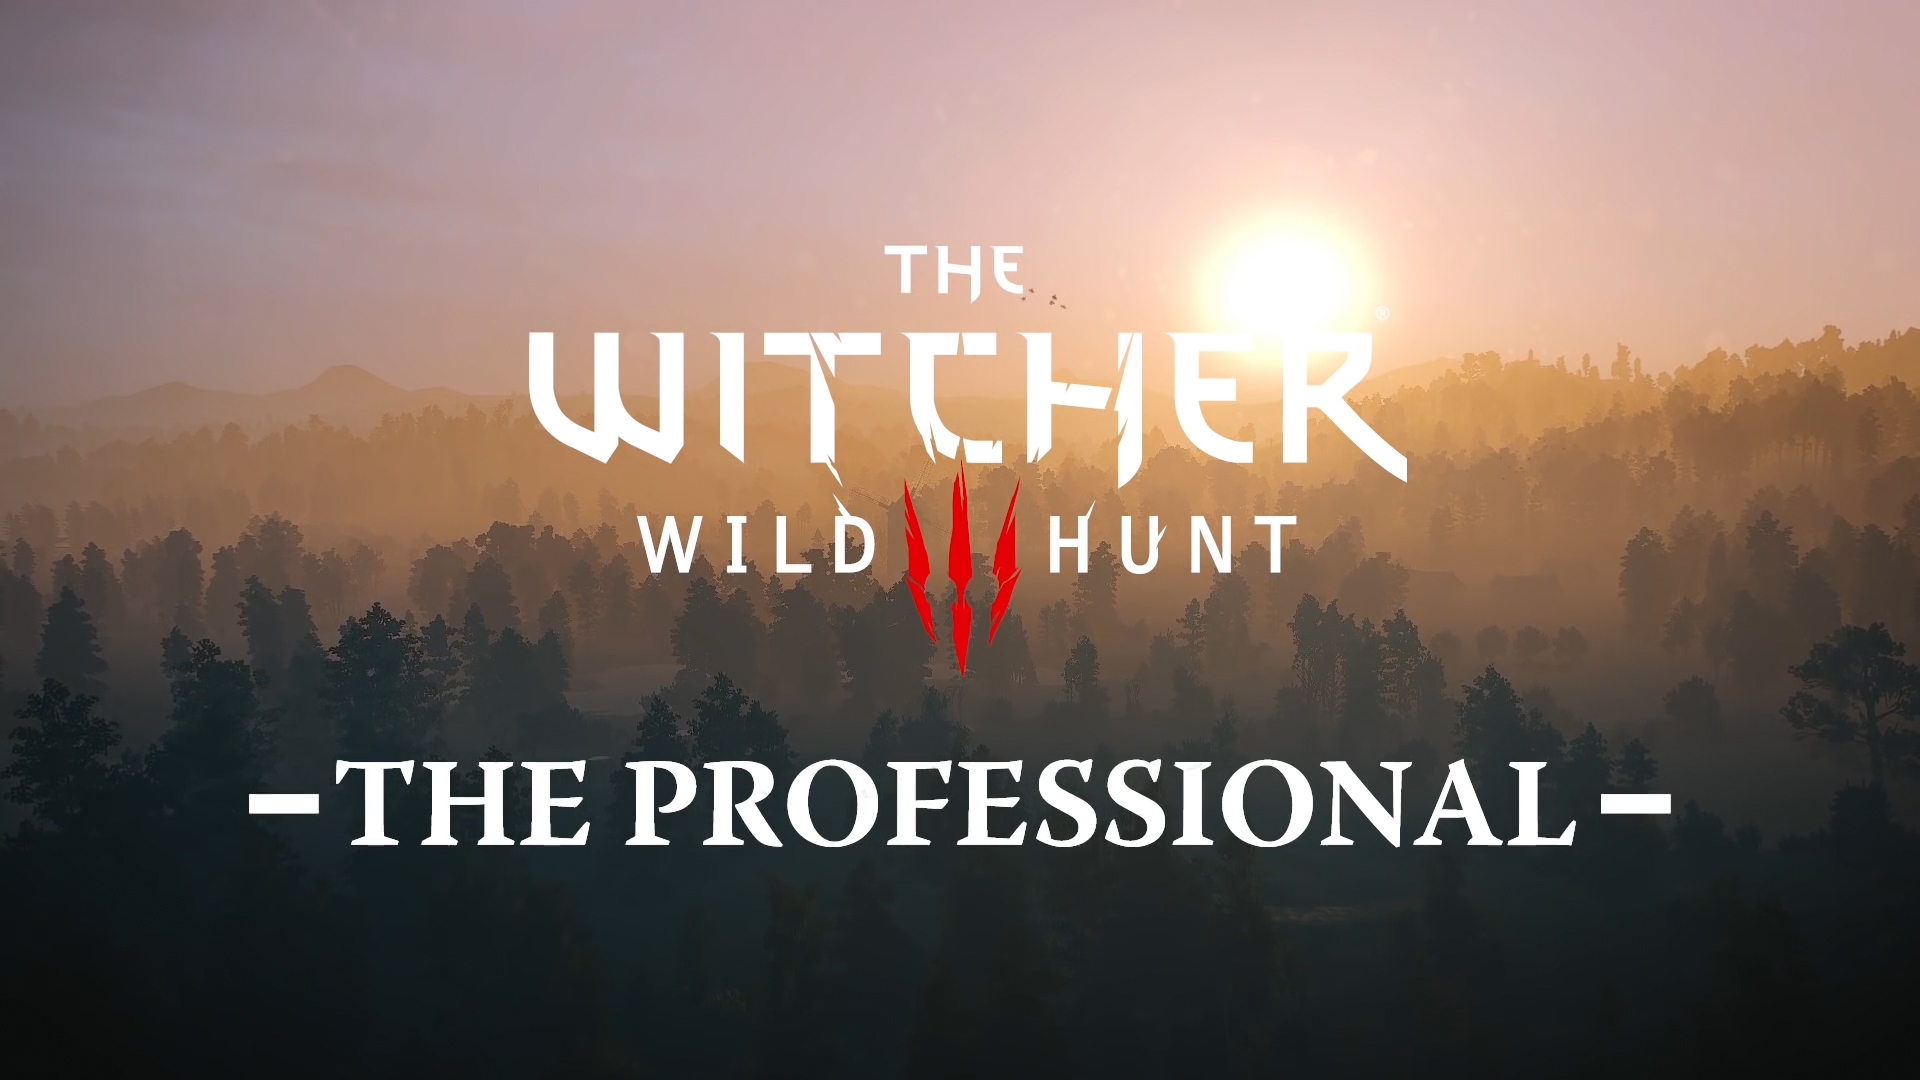 The Witcher Wild Hunt